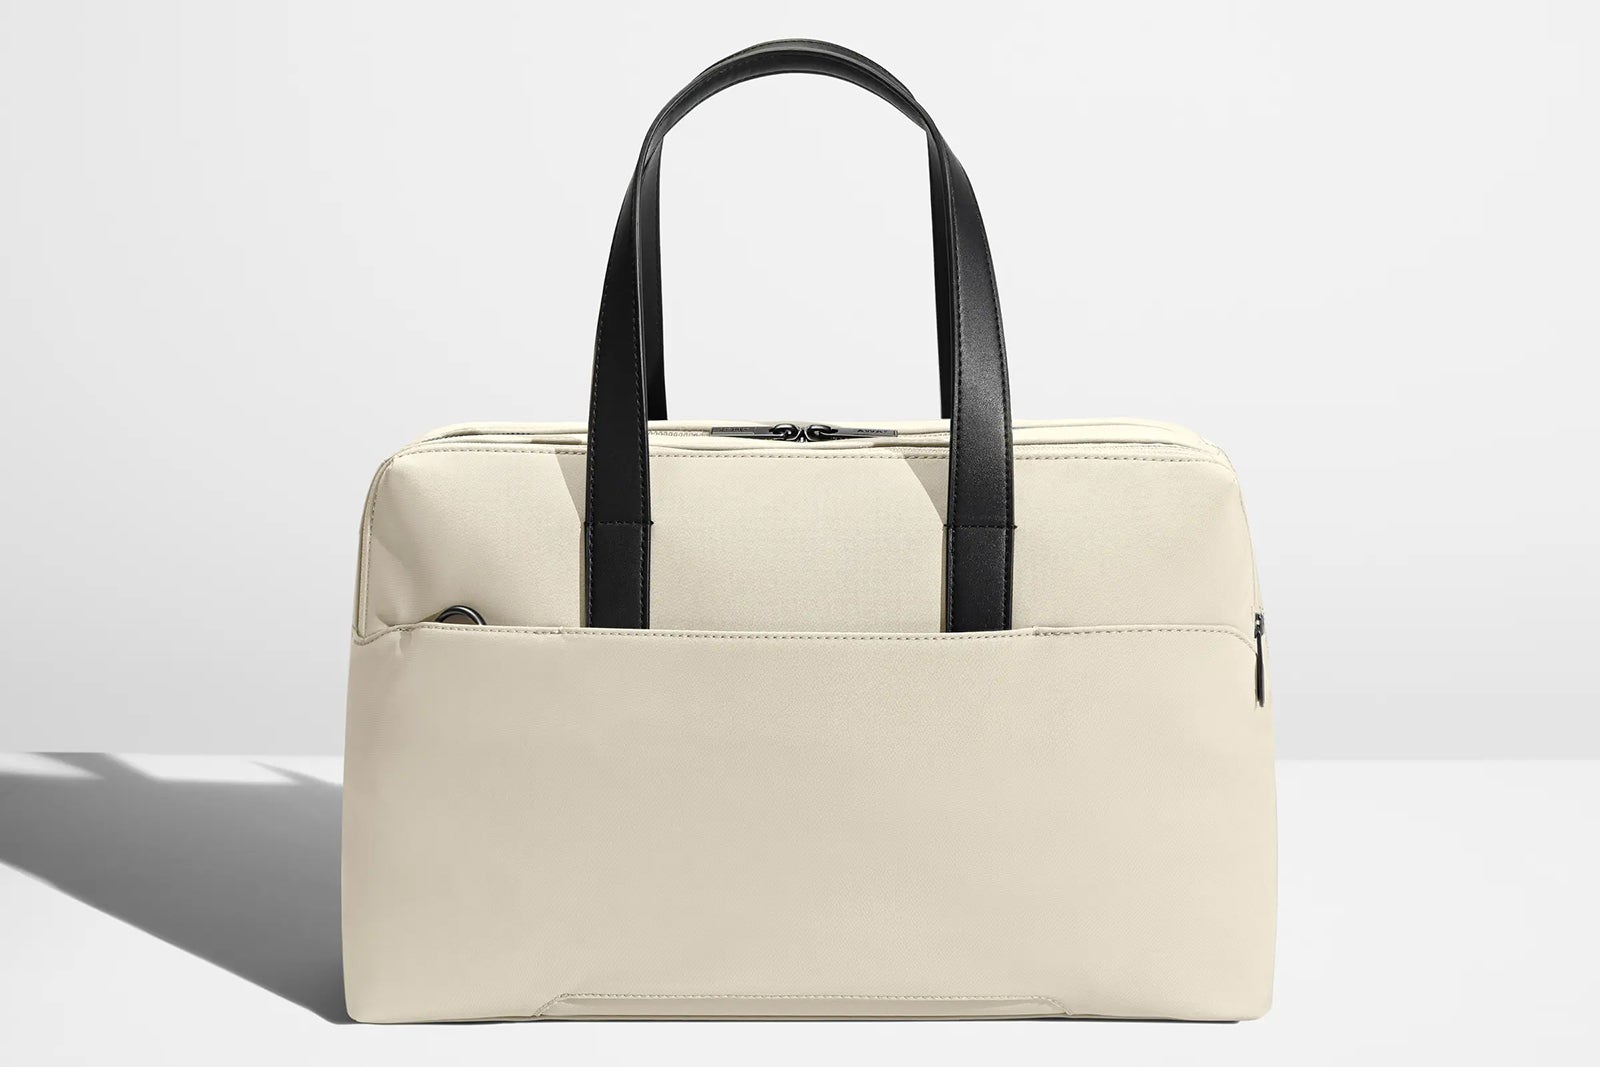 a cream-colored handbag with black handles